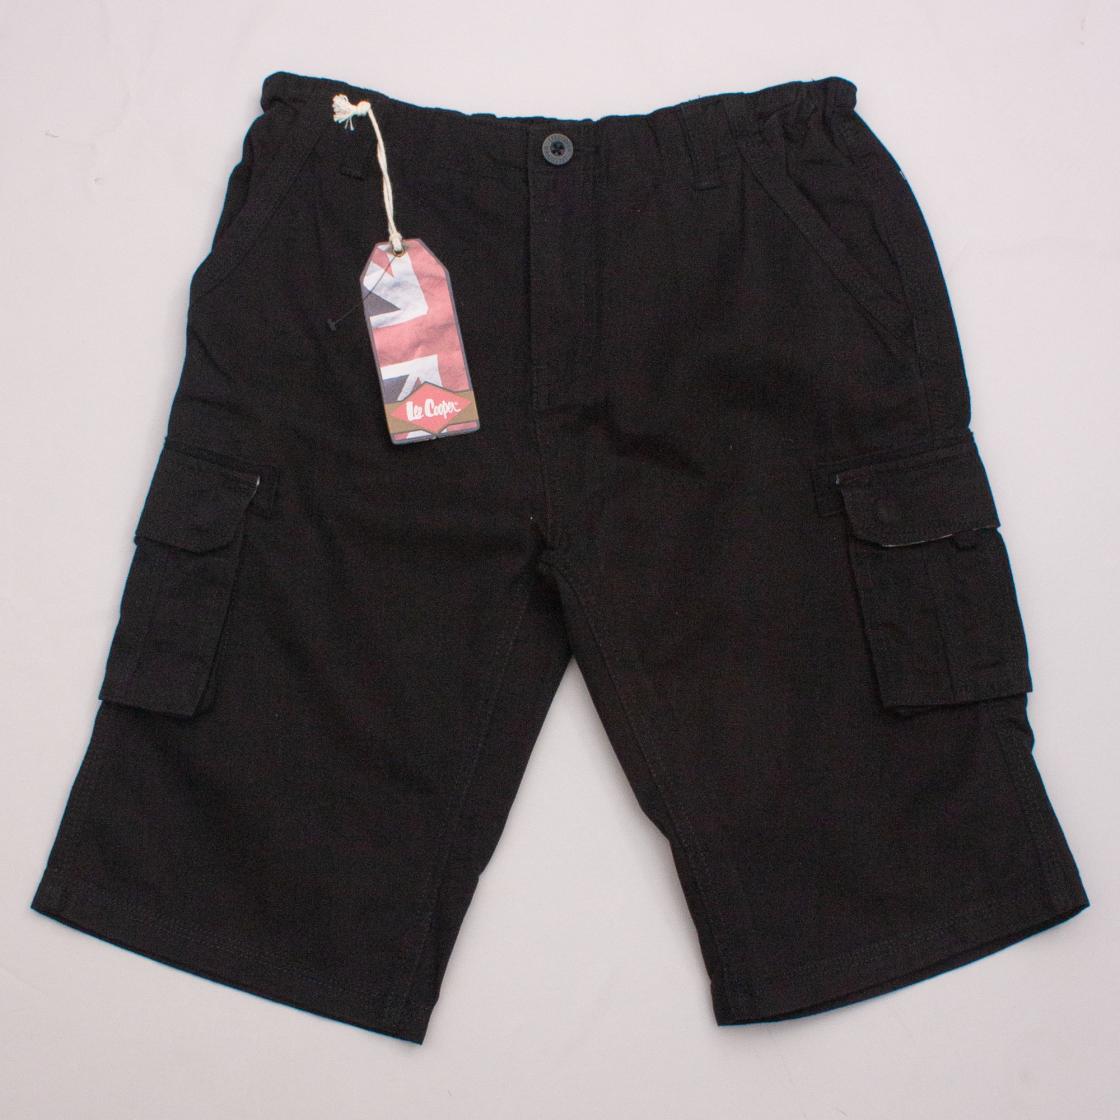 Lee Copper Black Cargo Shorts "Brand New"